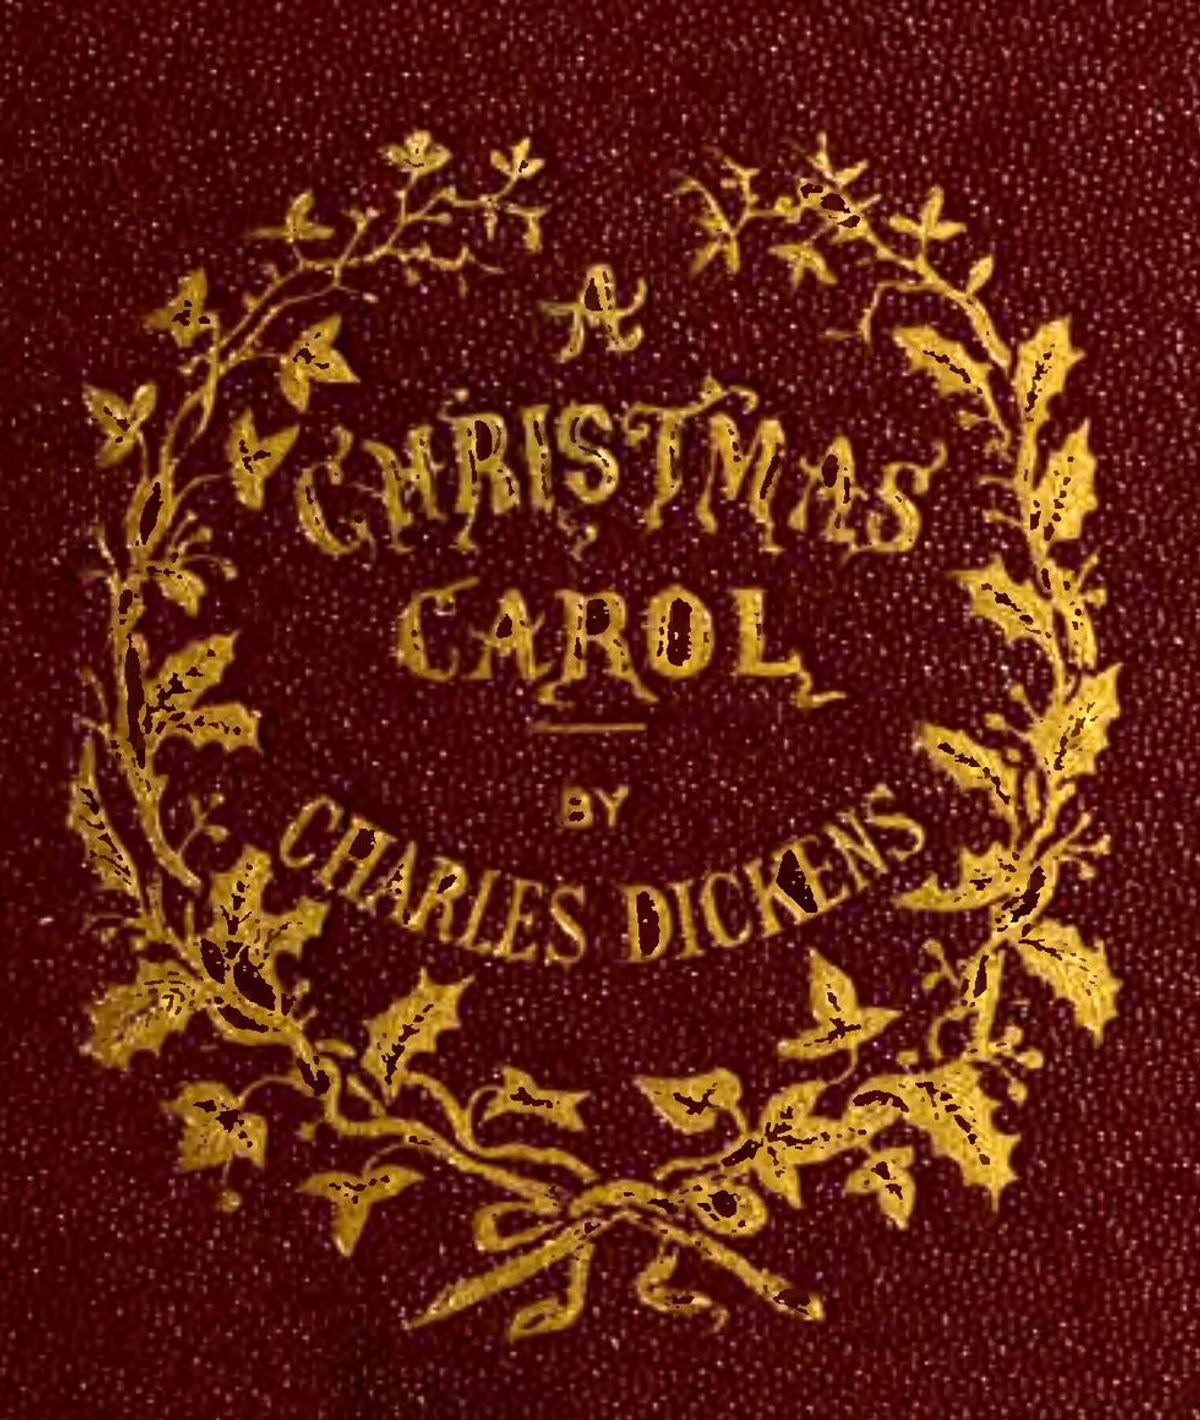 The Consistency of "A Christmas Carol"